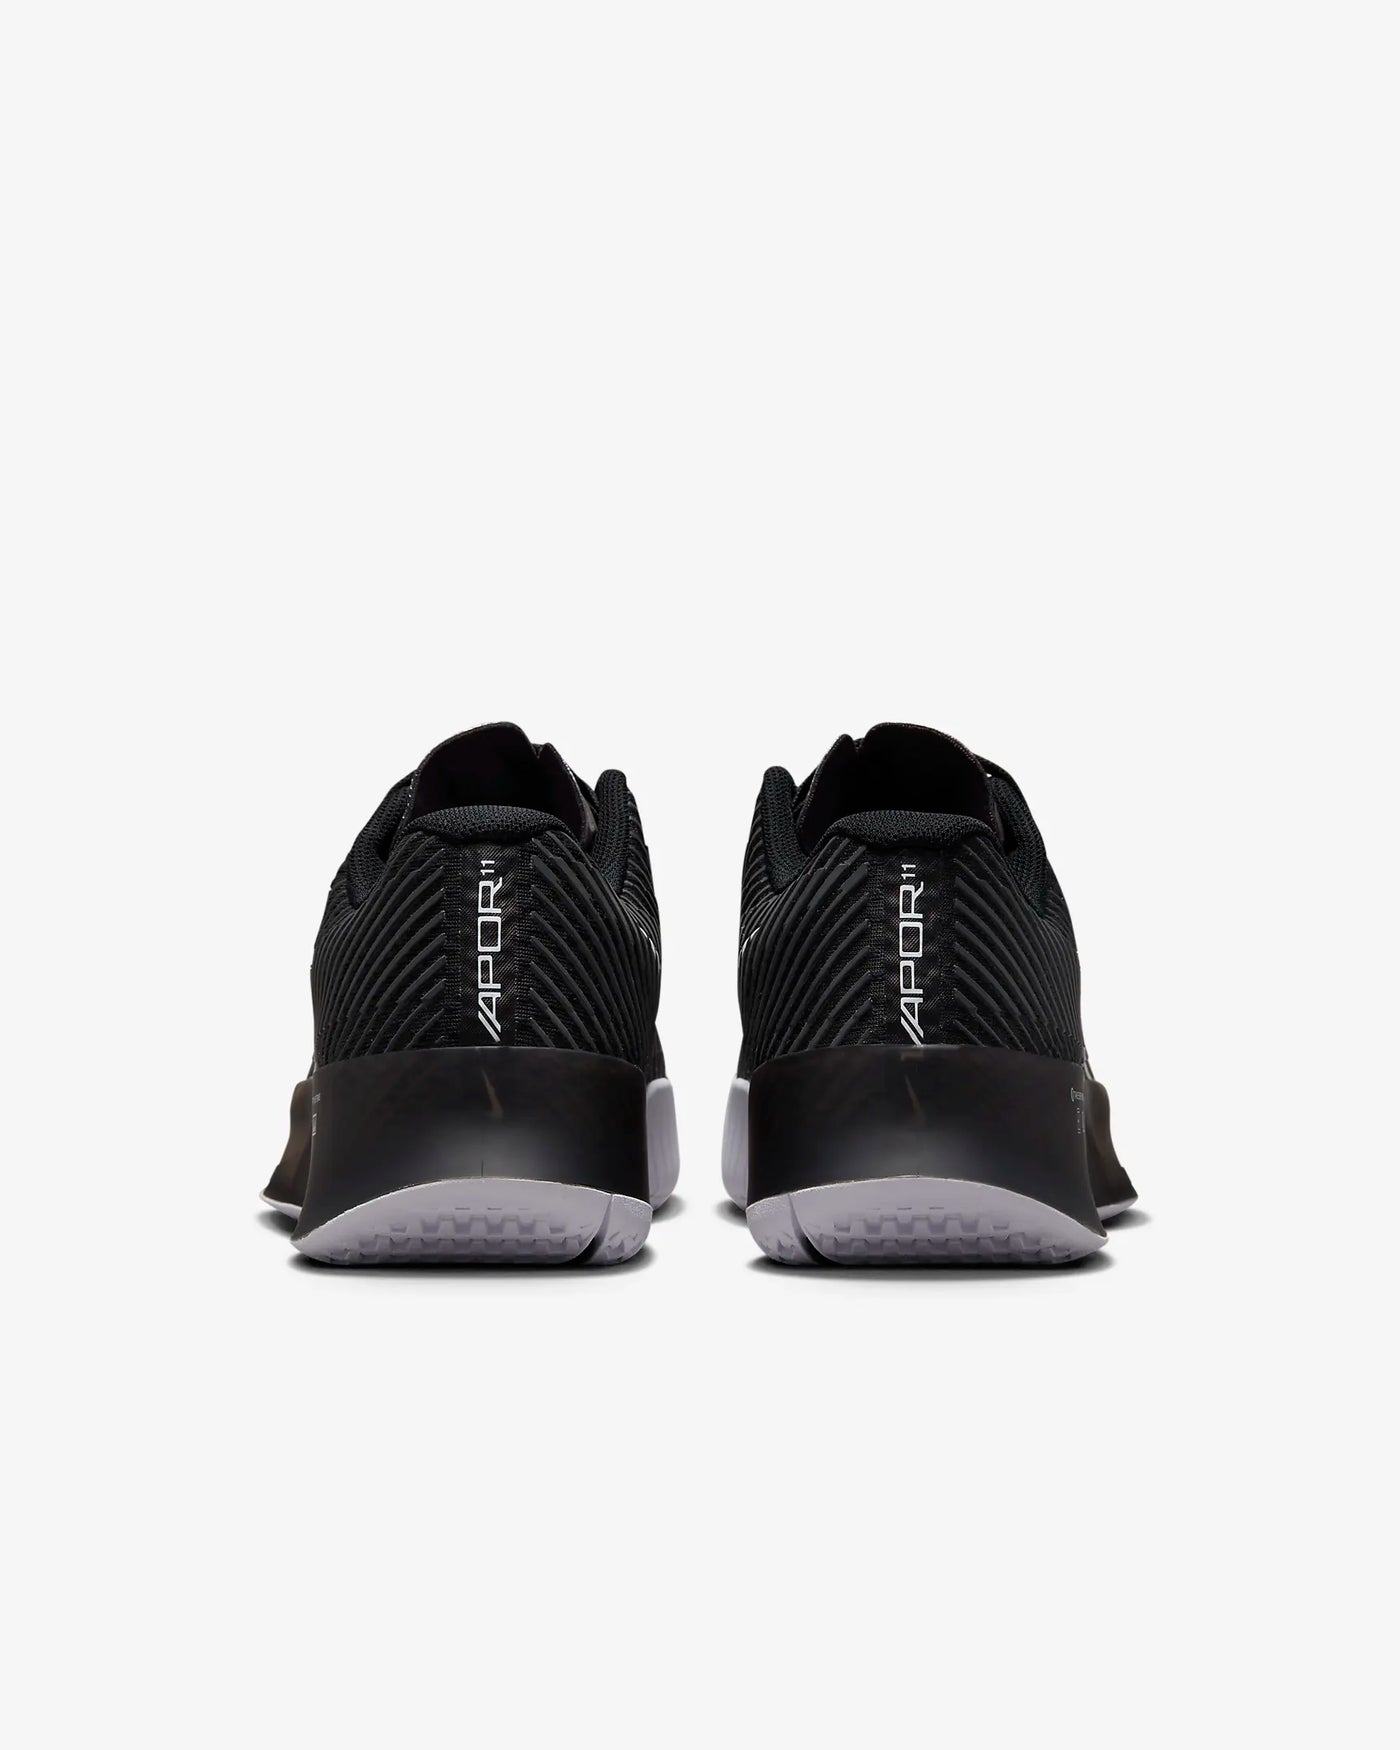 Ladies Nike Zoom Vapor 11  (Black/Silver)